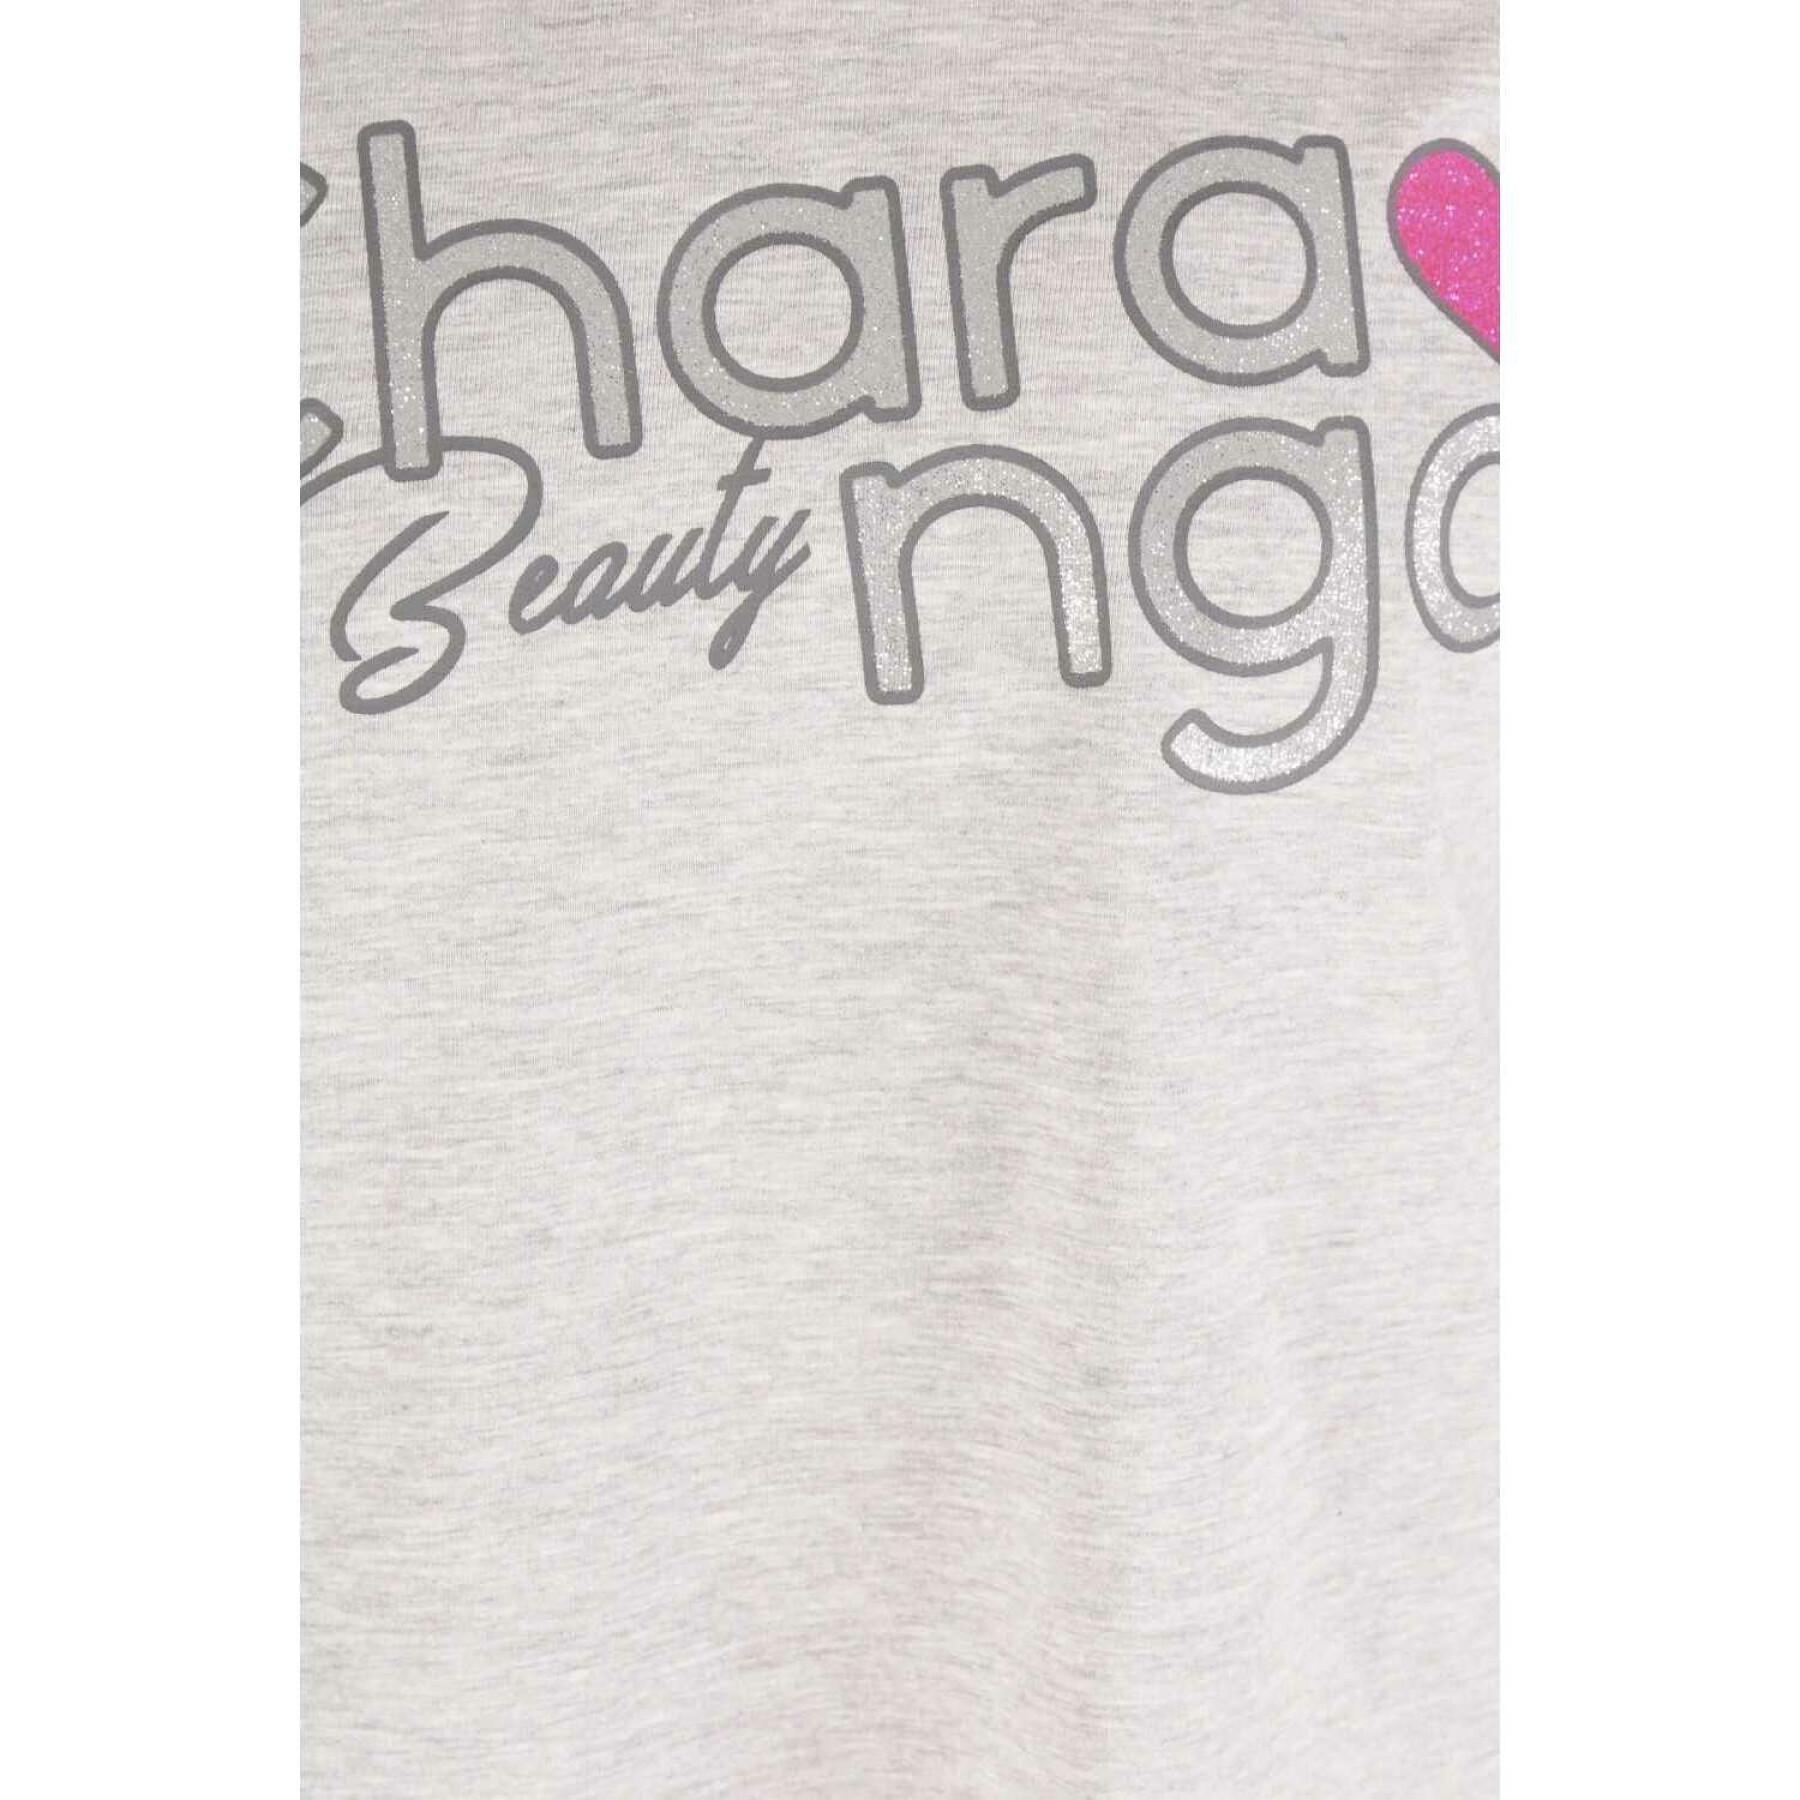 T-shirt fille Charanga Confix